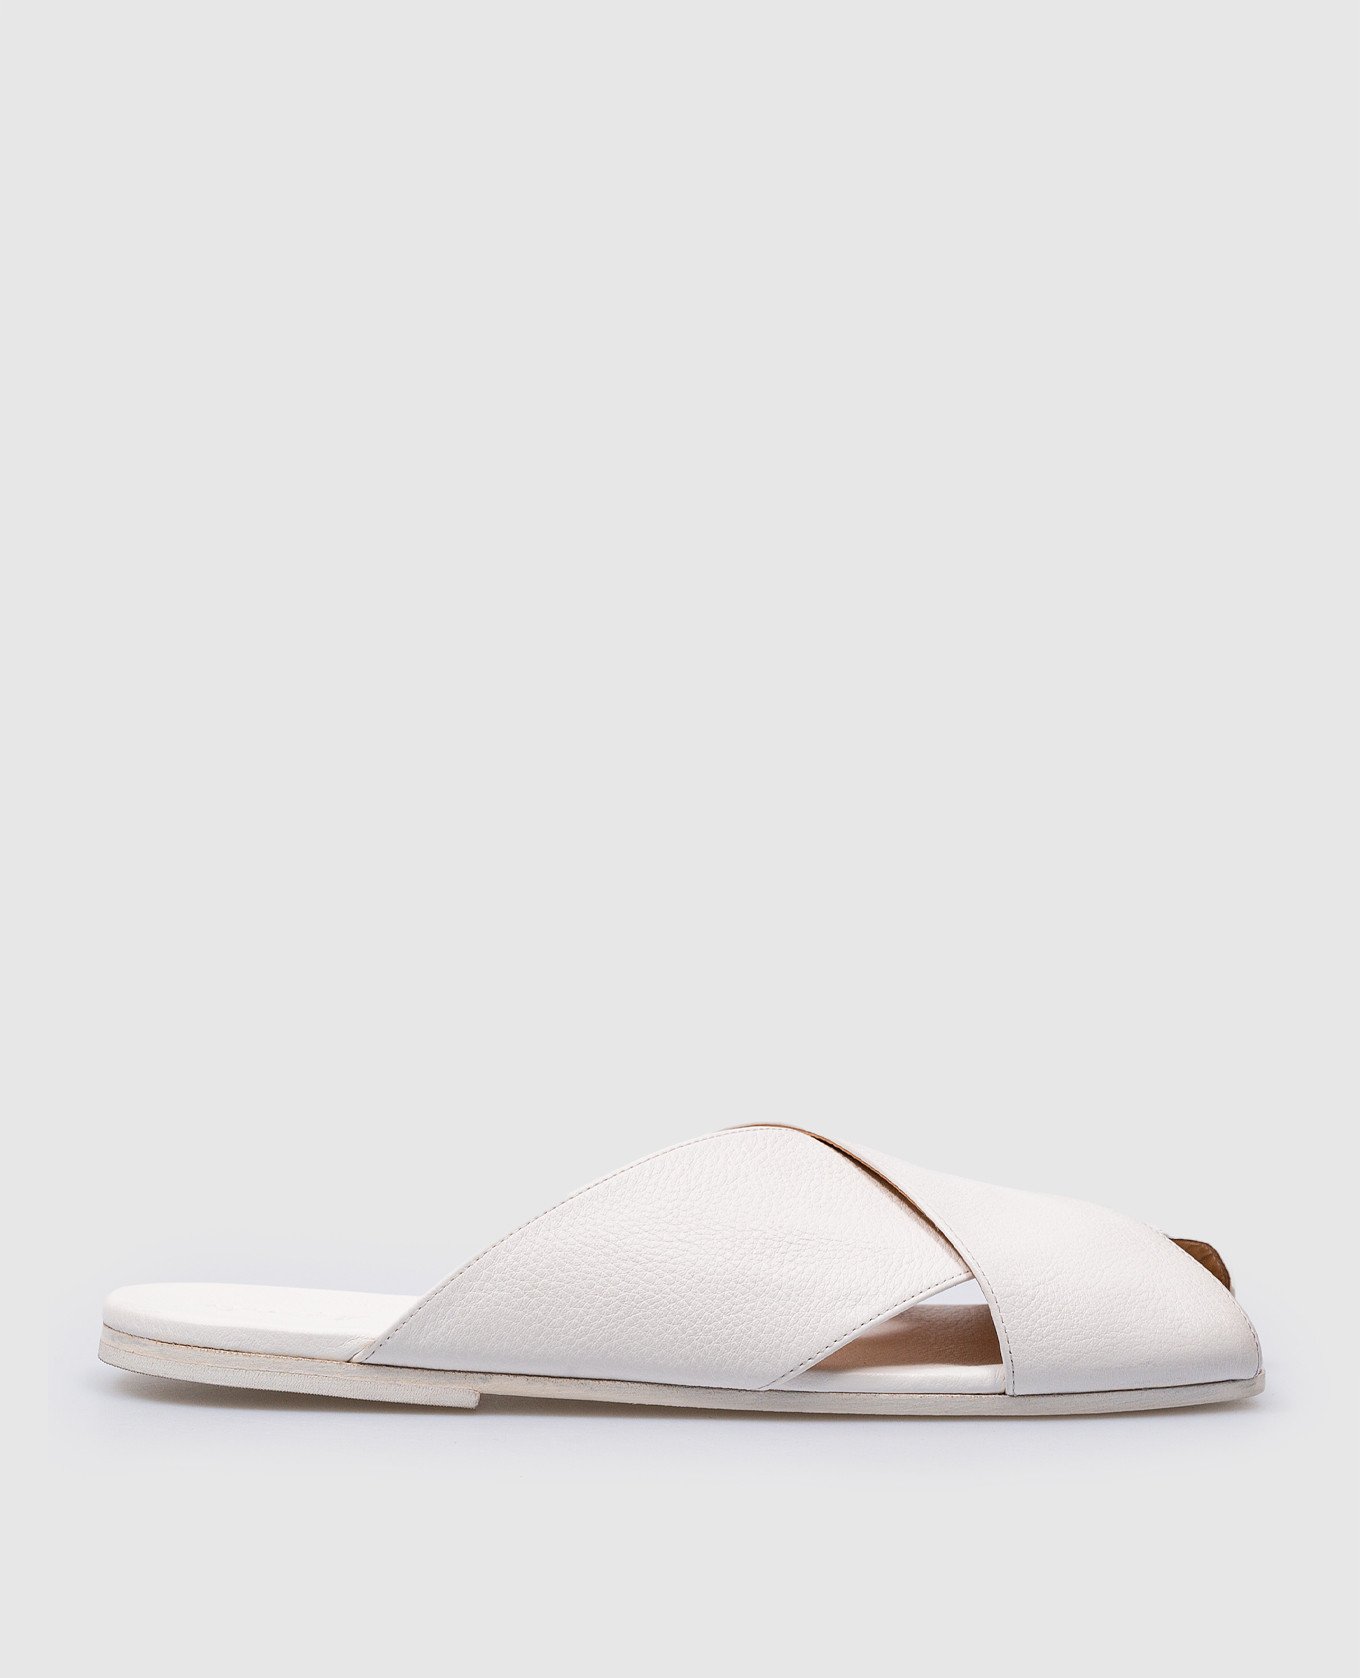 White leather flip-flops